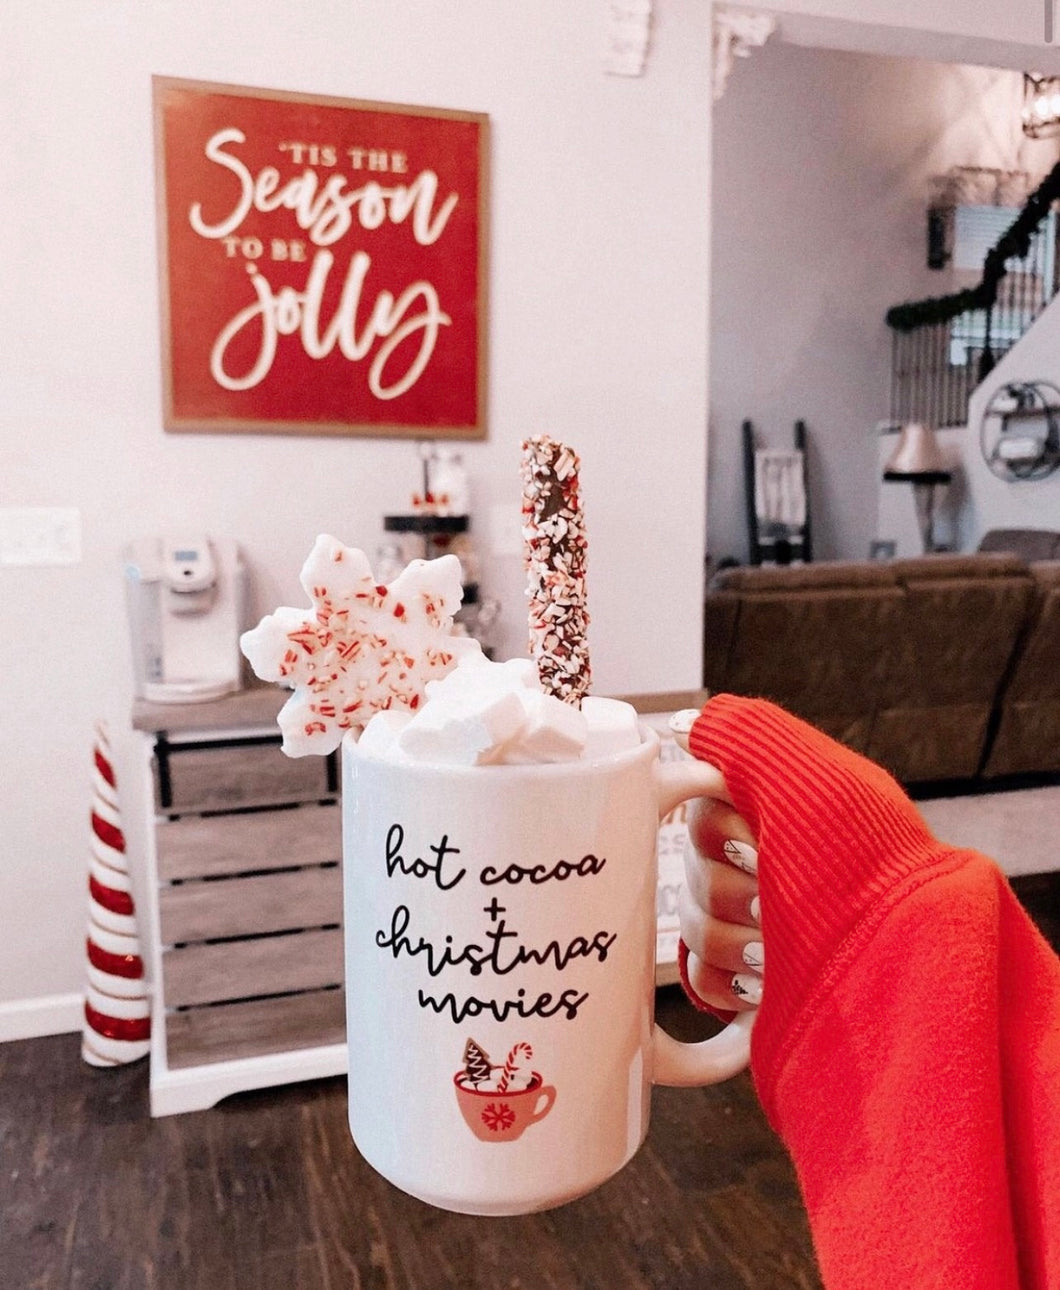 Hot cocoa and christmas movies Mug, cute mug, festive mug, christmas mug, punny mug, holiday mug